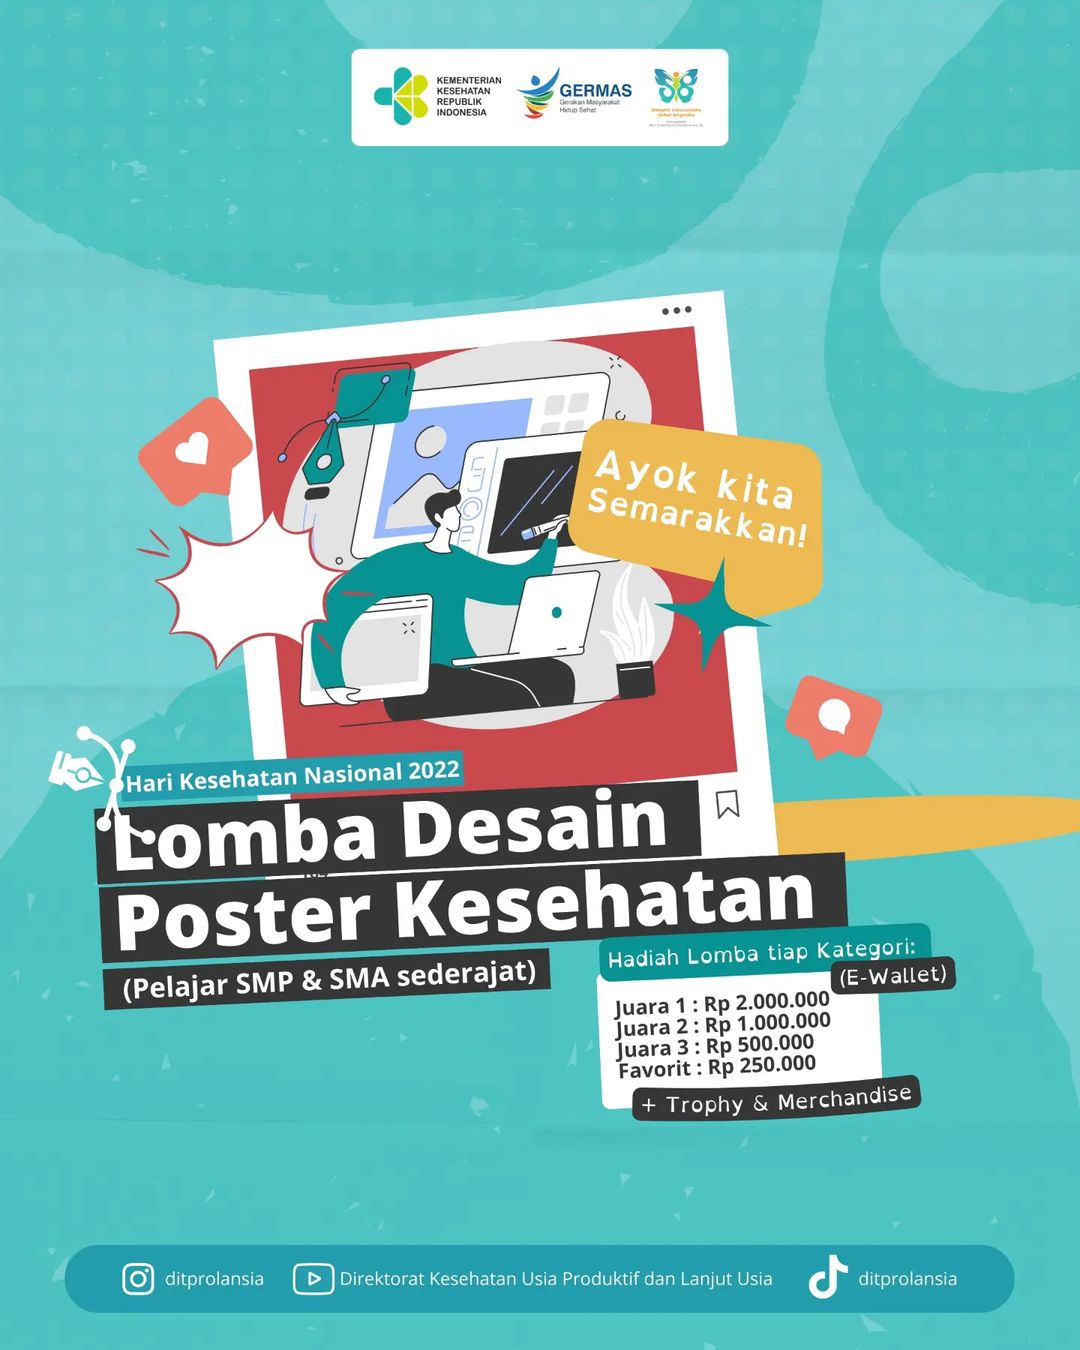 Gratis Lomba Desain Poster Kesehatan 2022